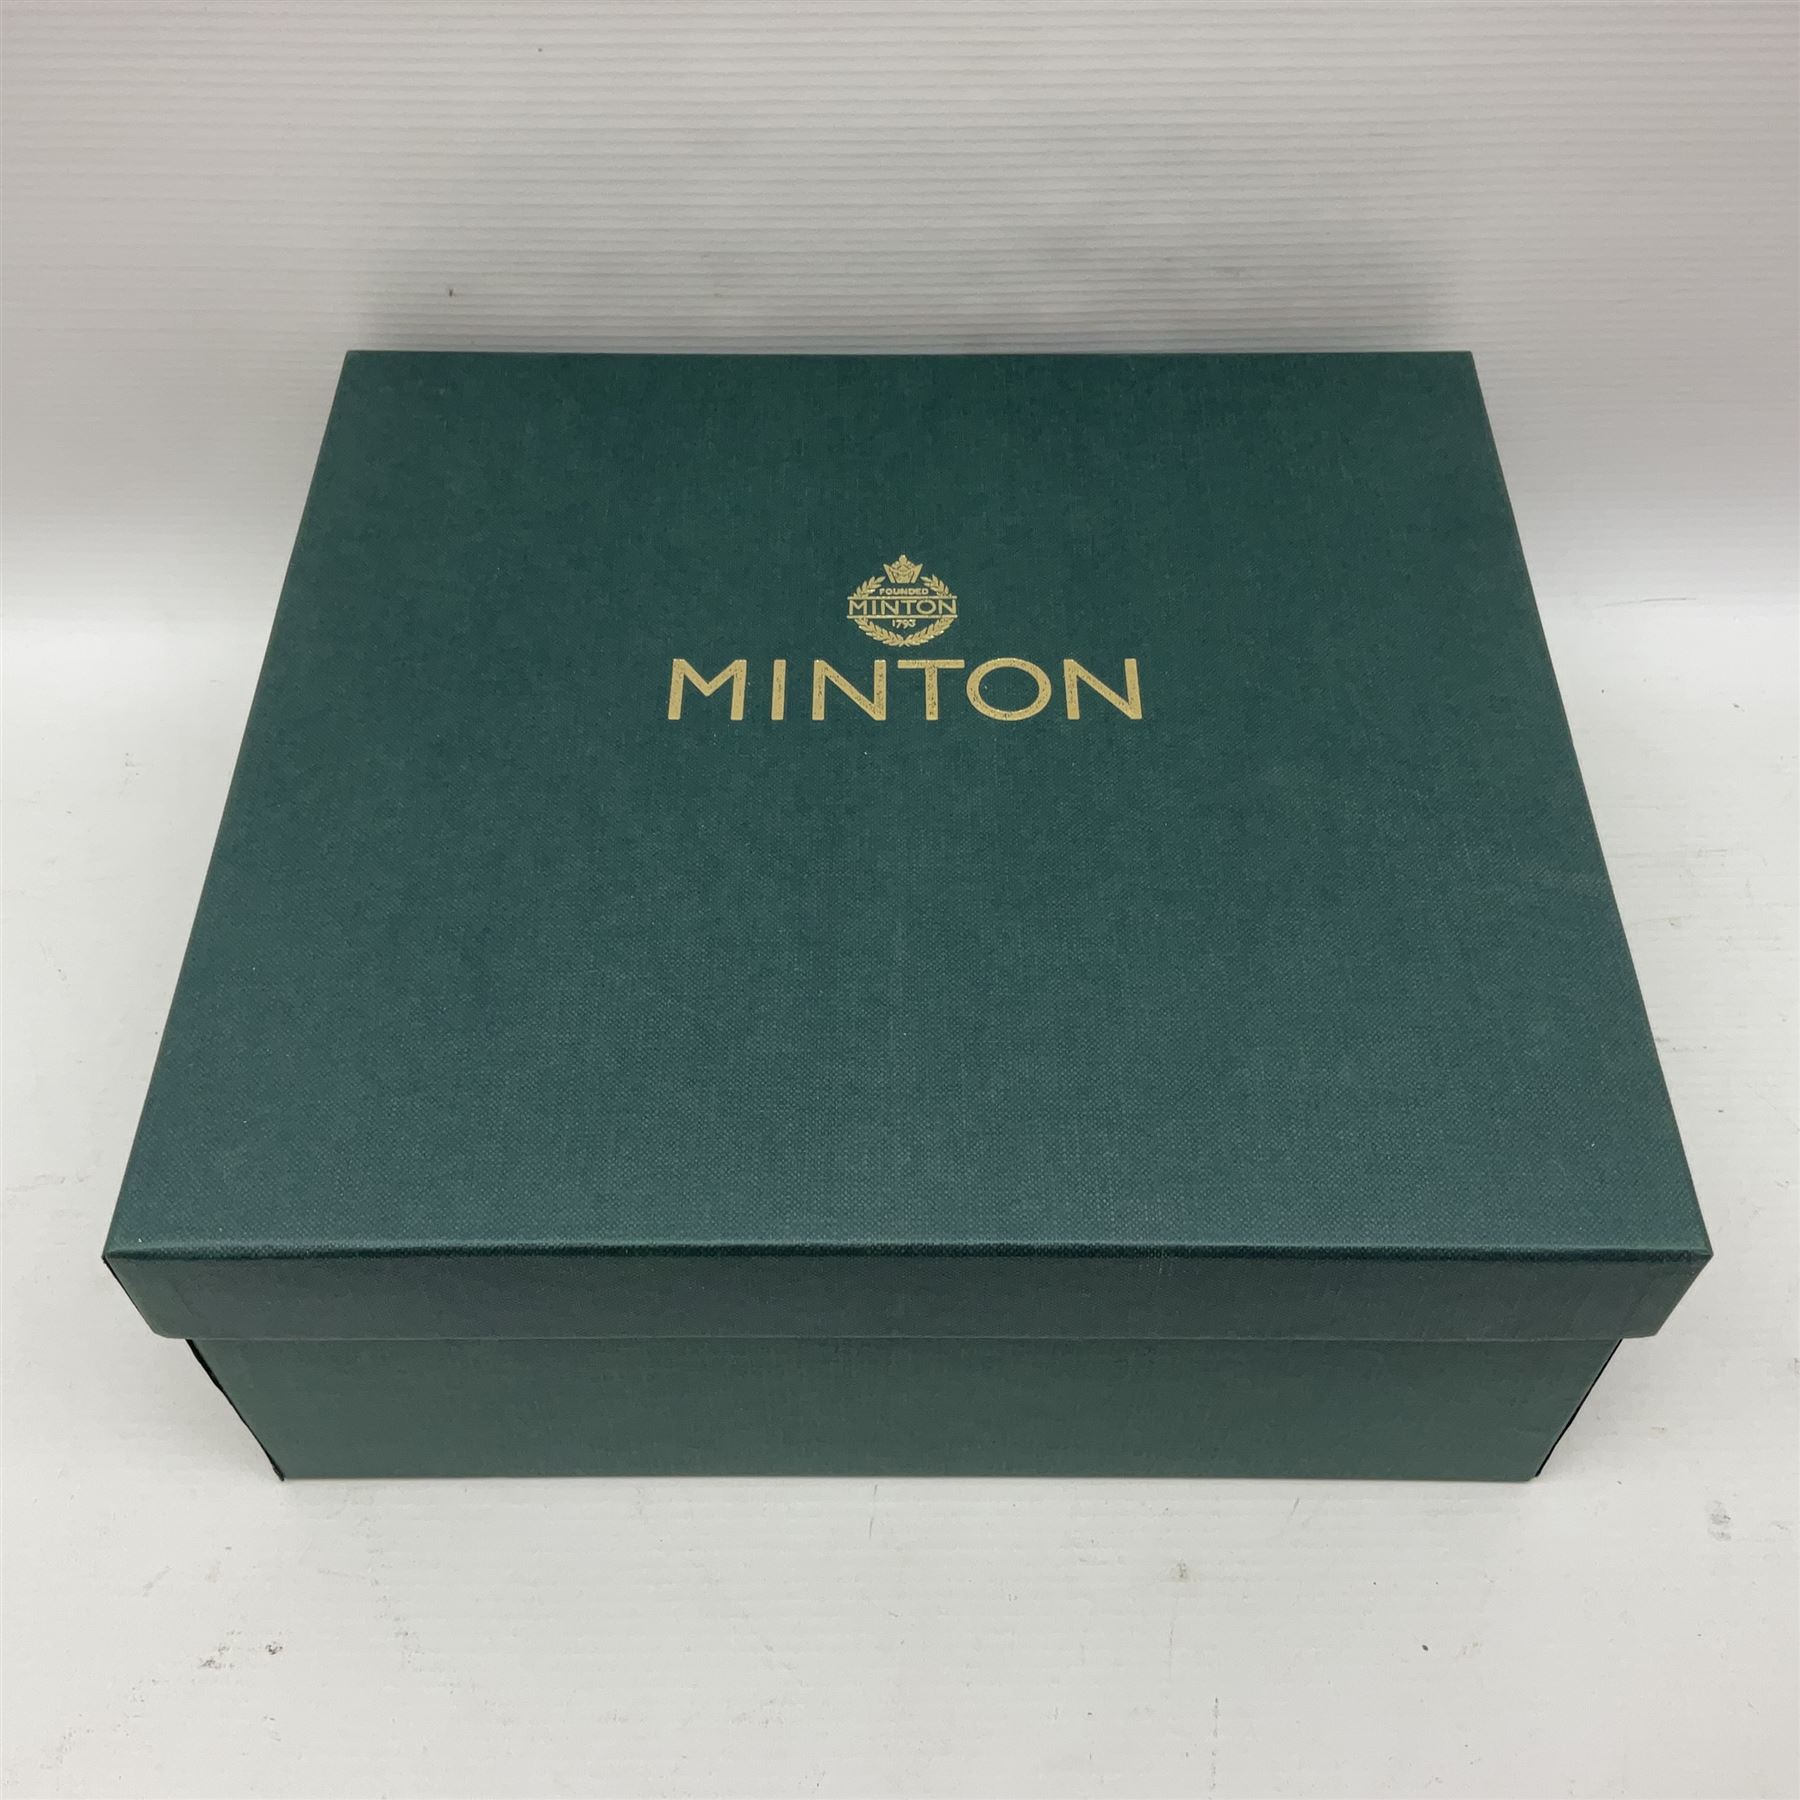 Minton Archive collection cockerel teapot - Image 2 of 12